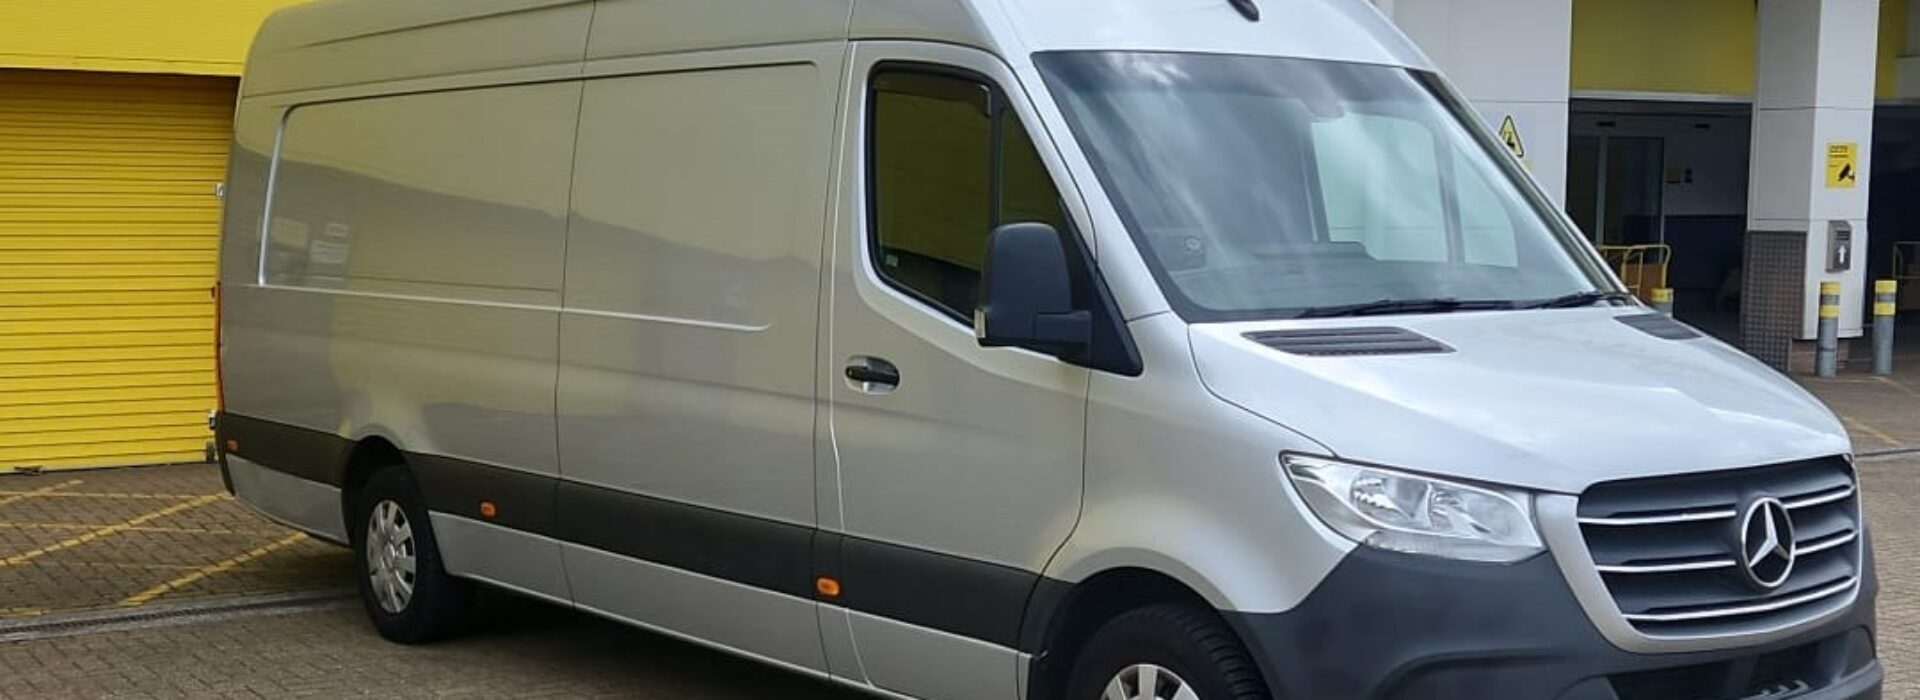 removal van in Bristol